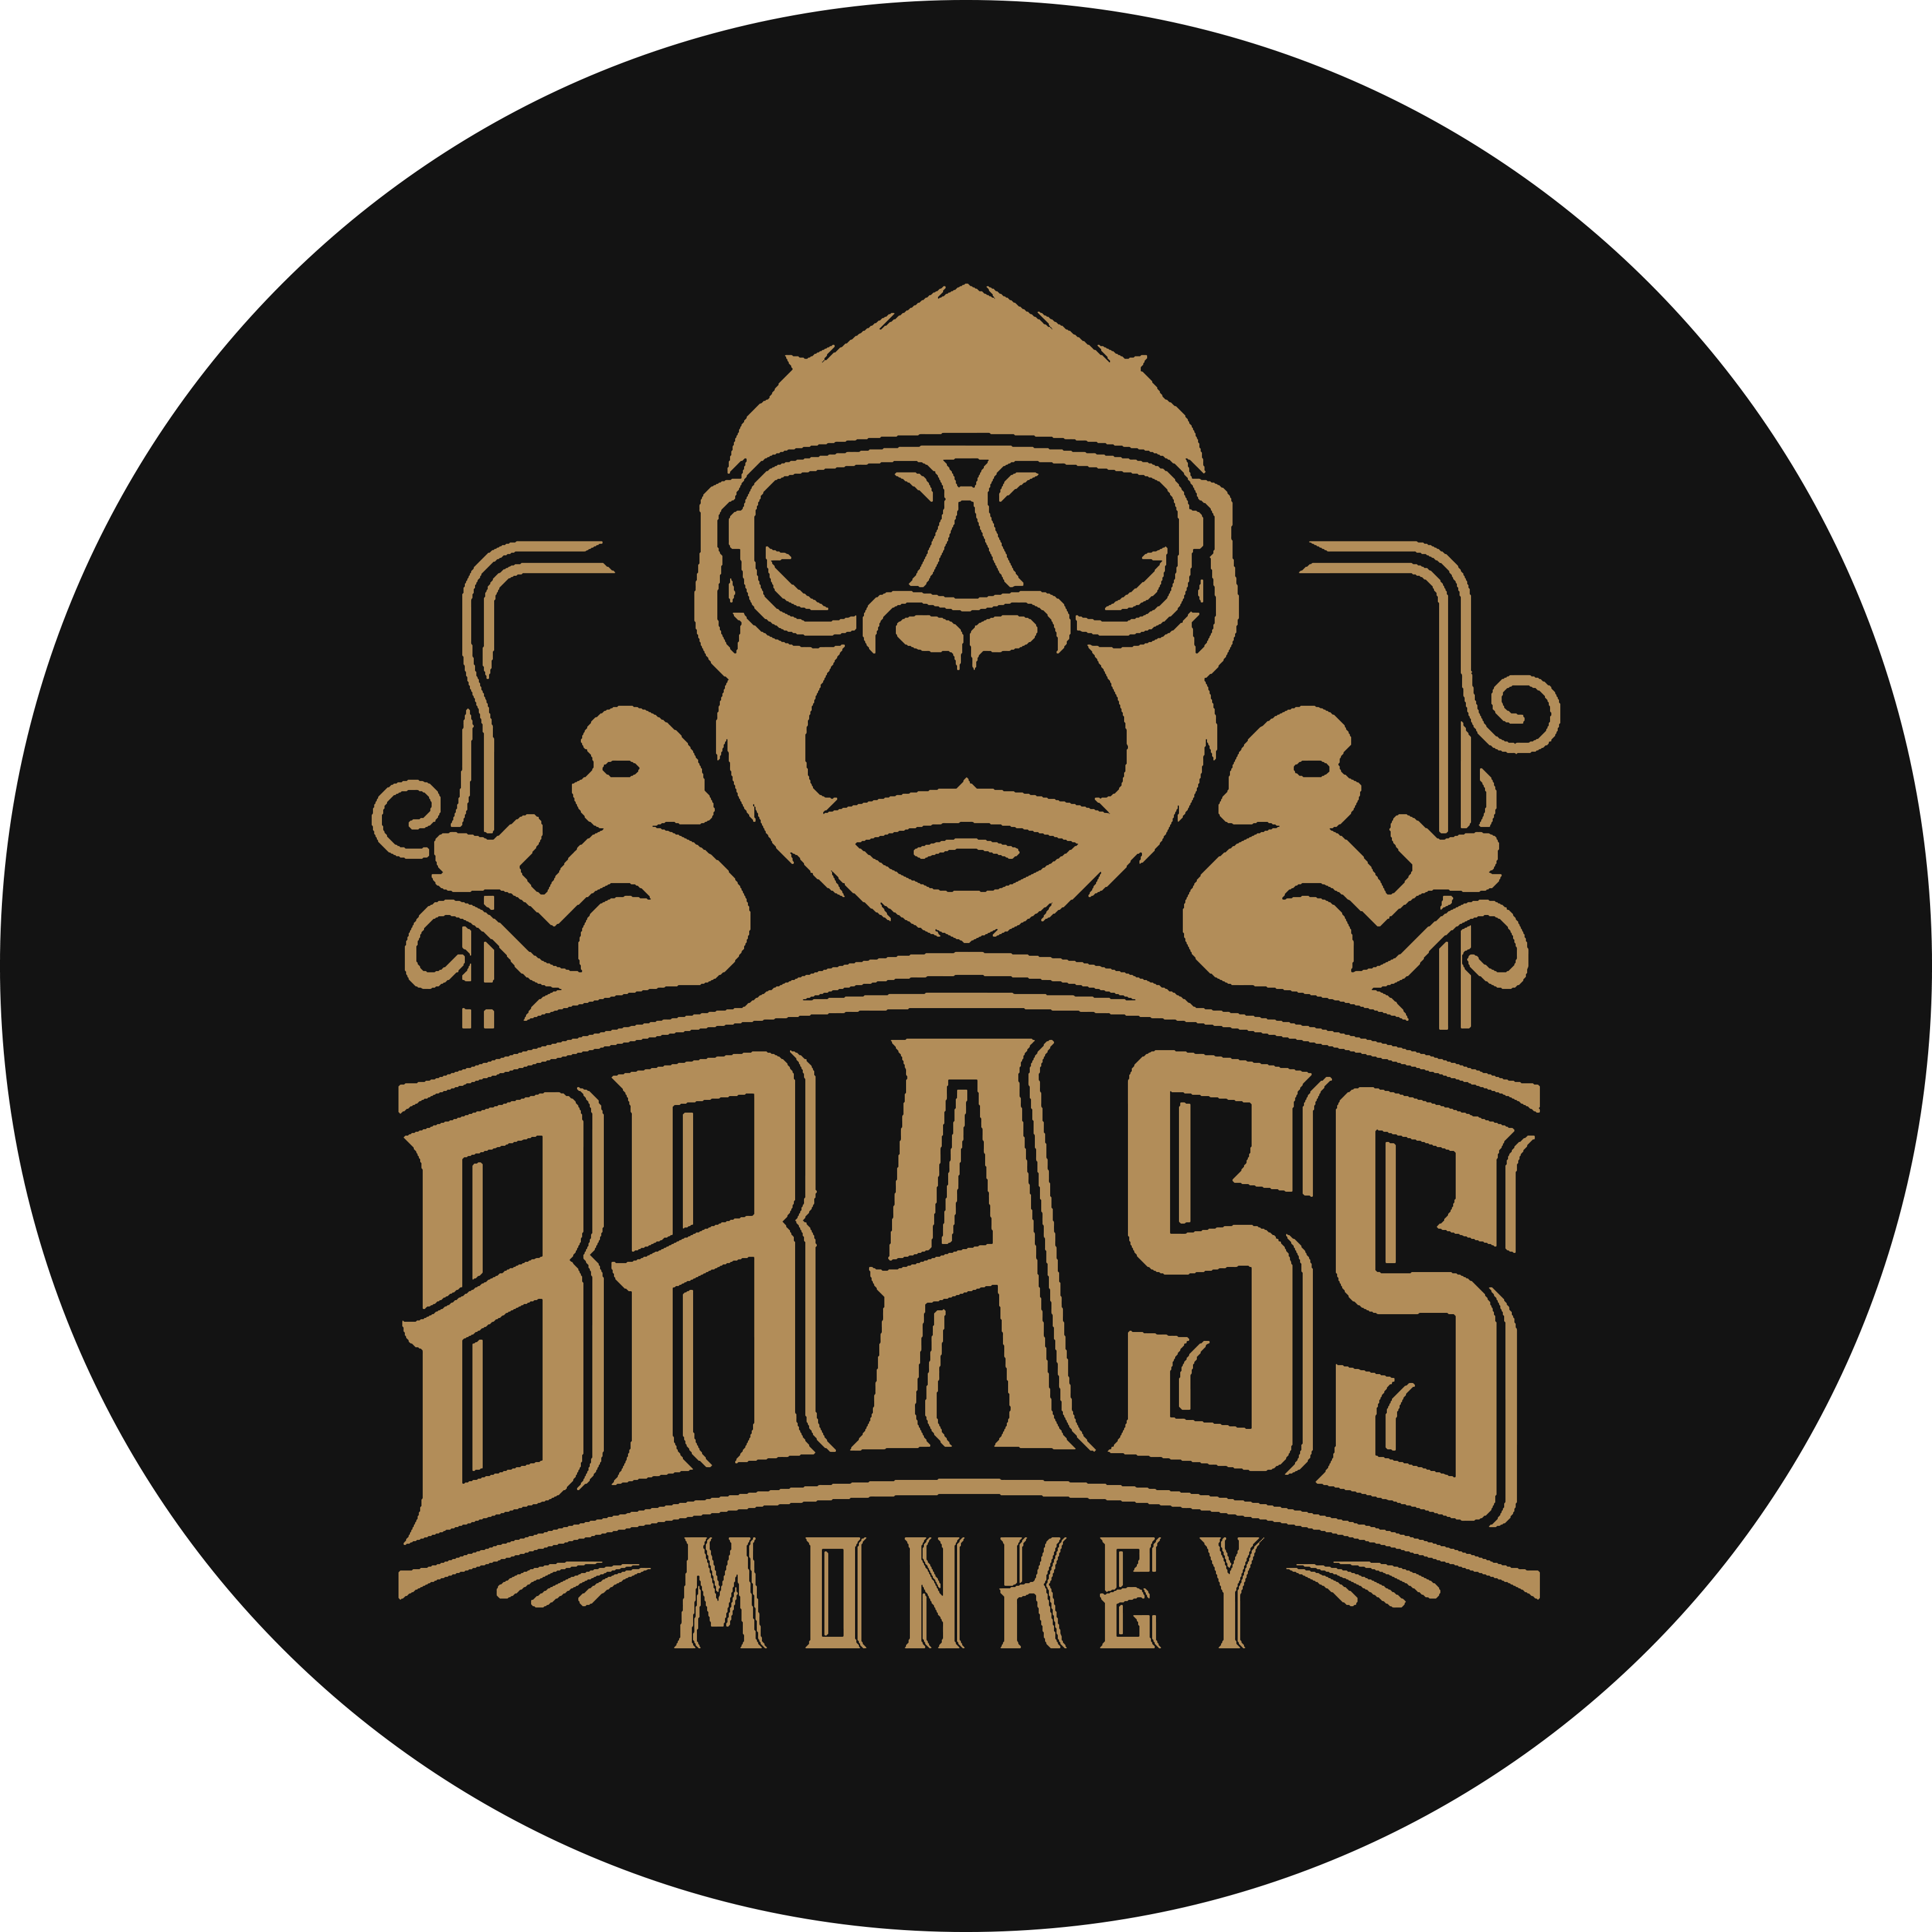 Brass Monkey